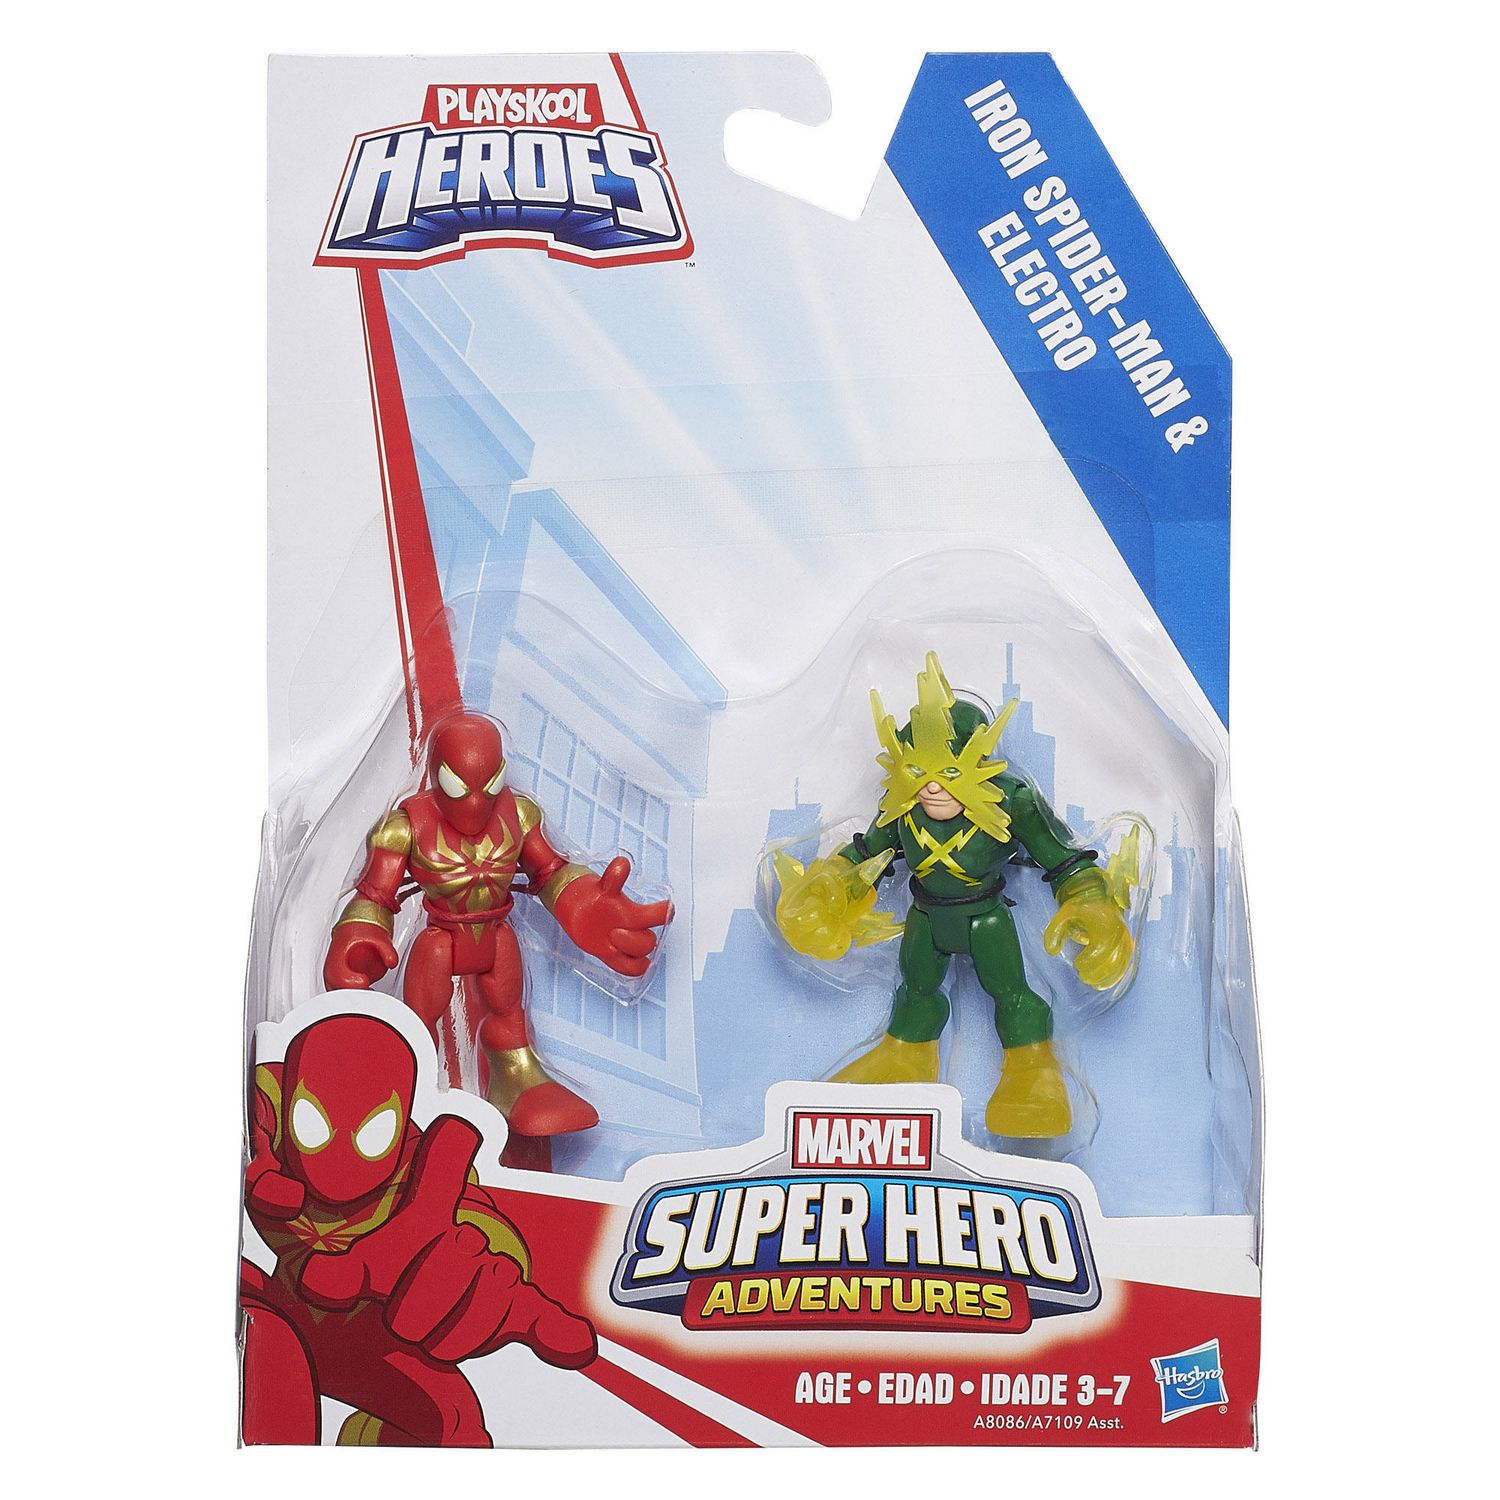 Playskool Heroes Marvel Super Hero Adventures Iron Spider-Man And